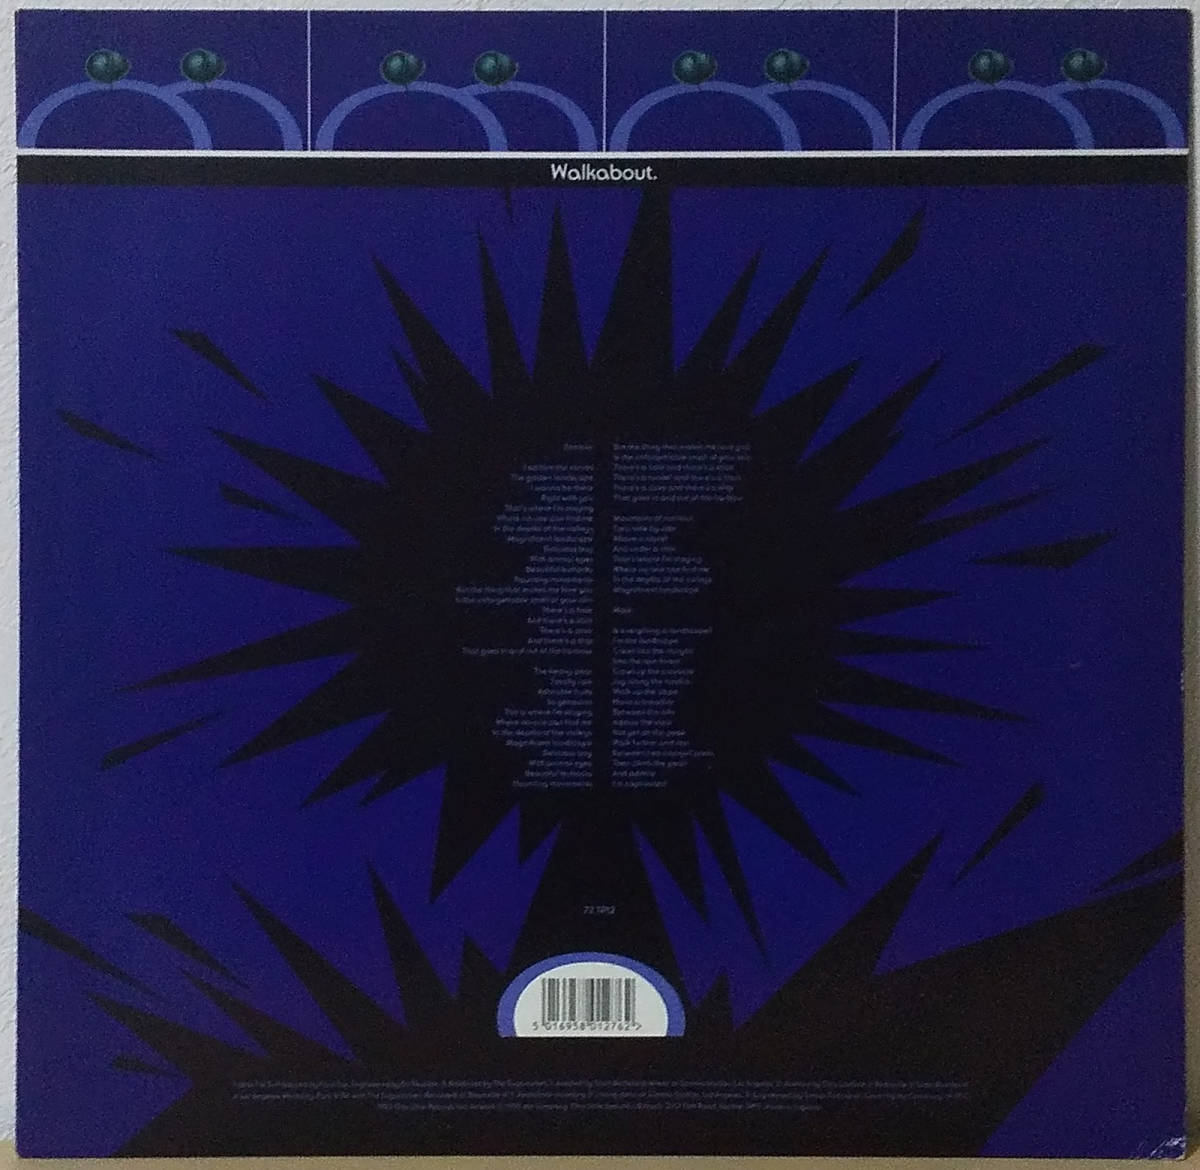 The Sugarcubes - Walkabout UK盤 12inch One Little Indian - 72 TP12 シュガーキューブス 1992年 Bjork_画像2